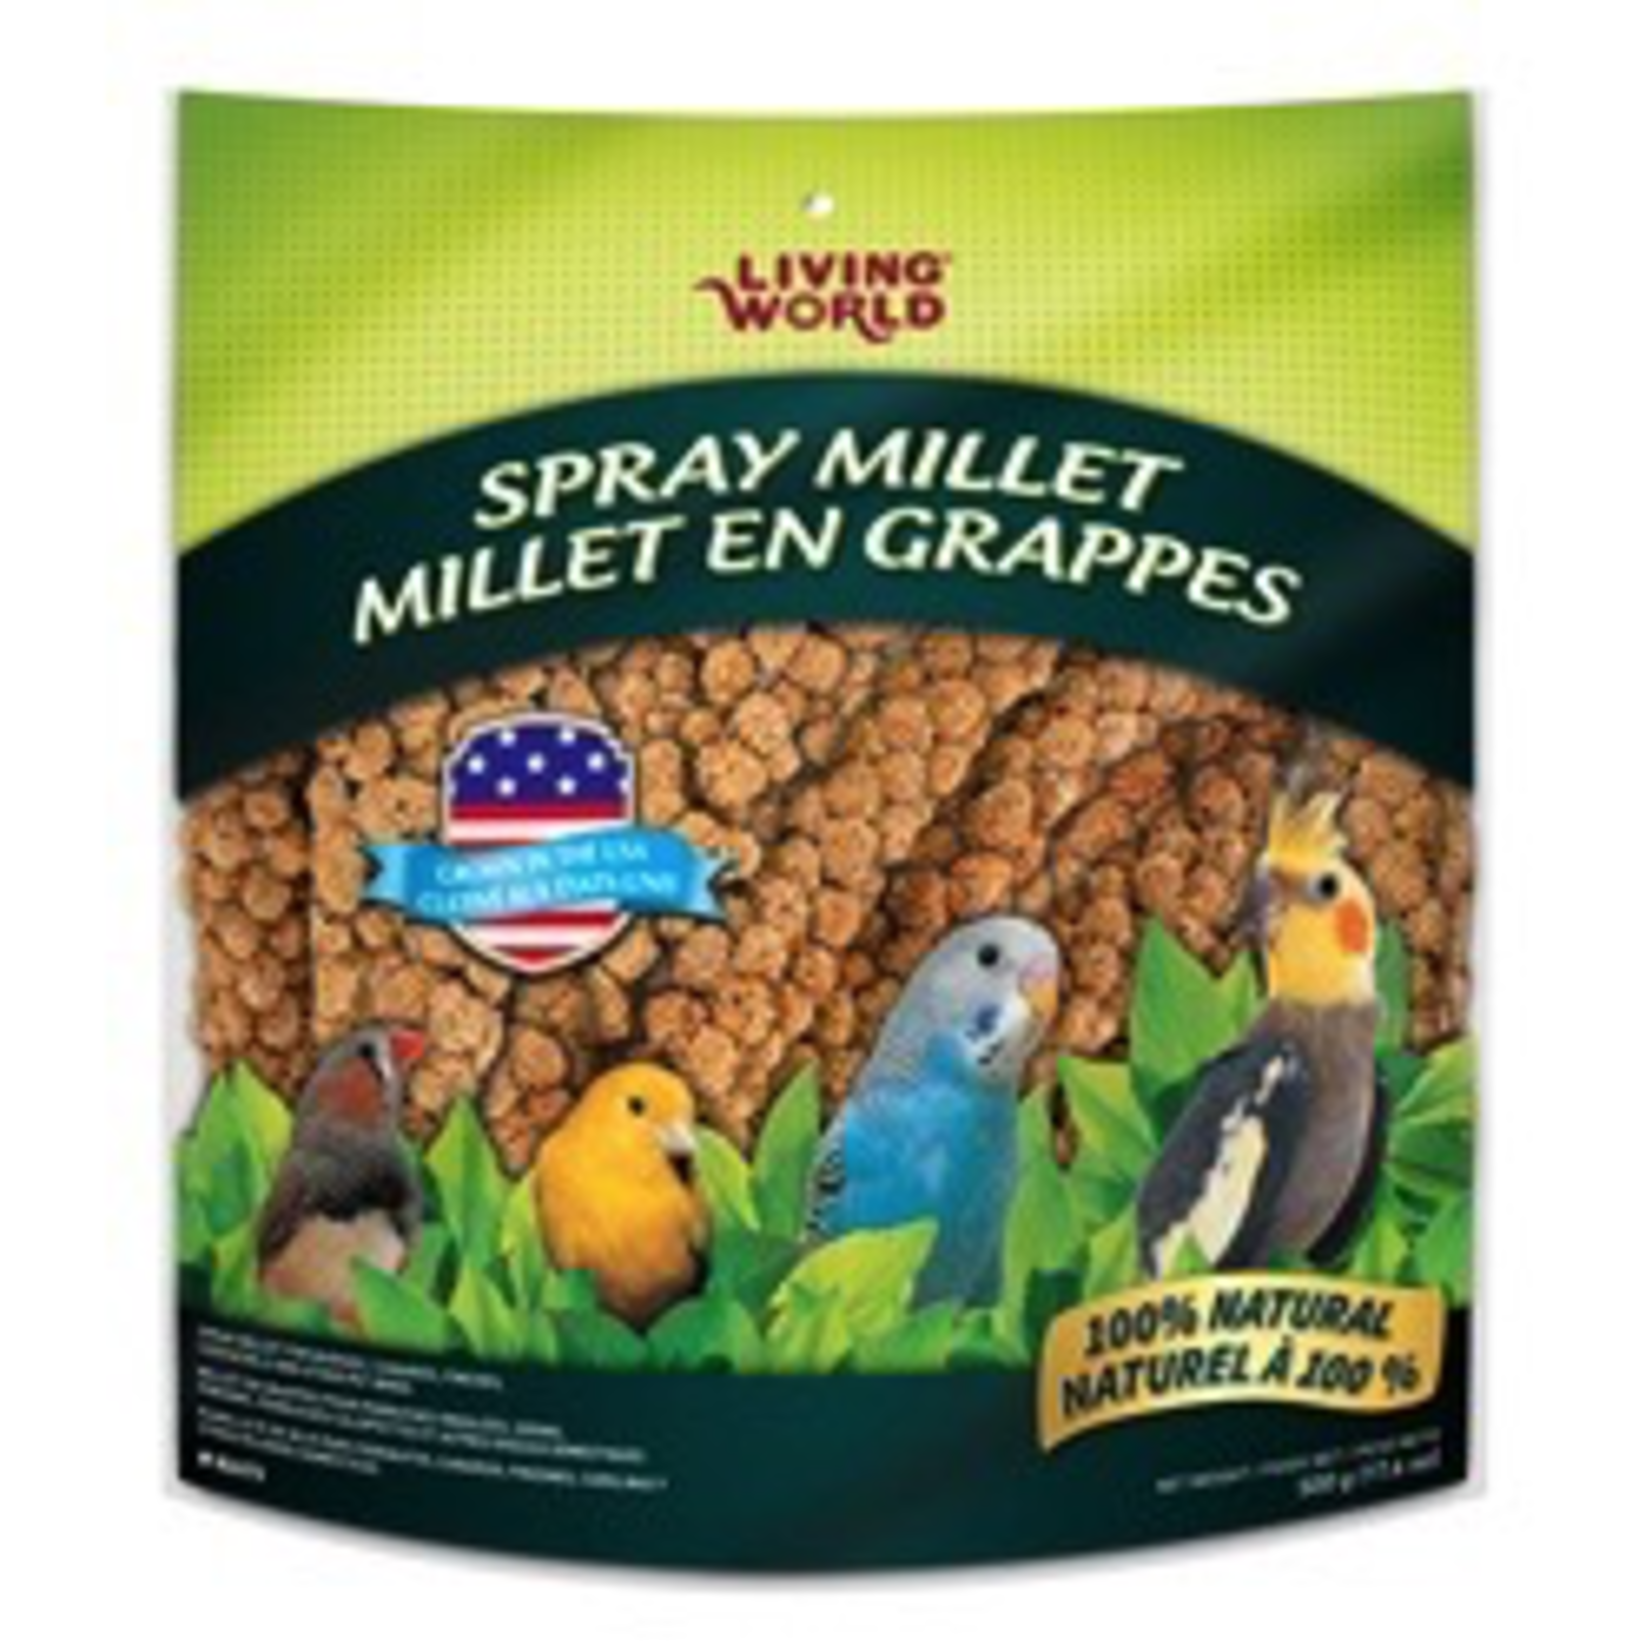 LIVING WORLD (W) Living World Spray Millet - 500 g (17.6 oz)